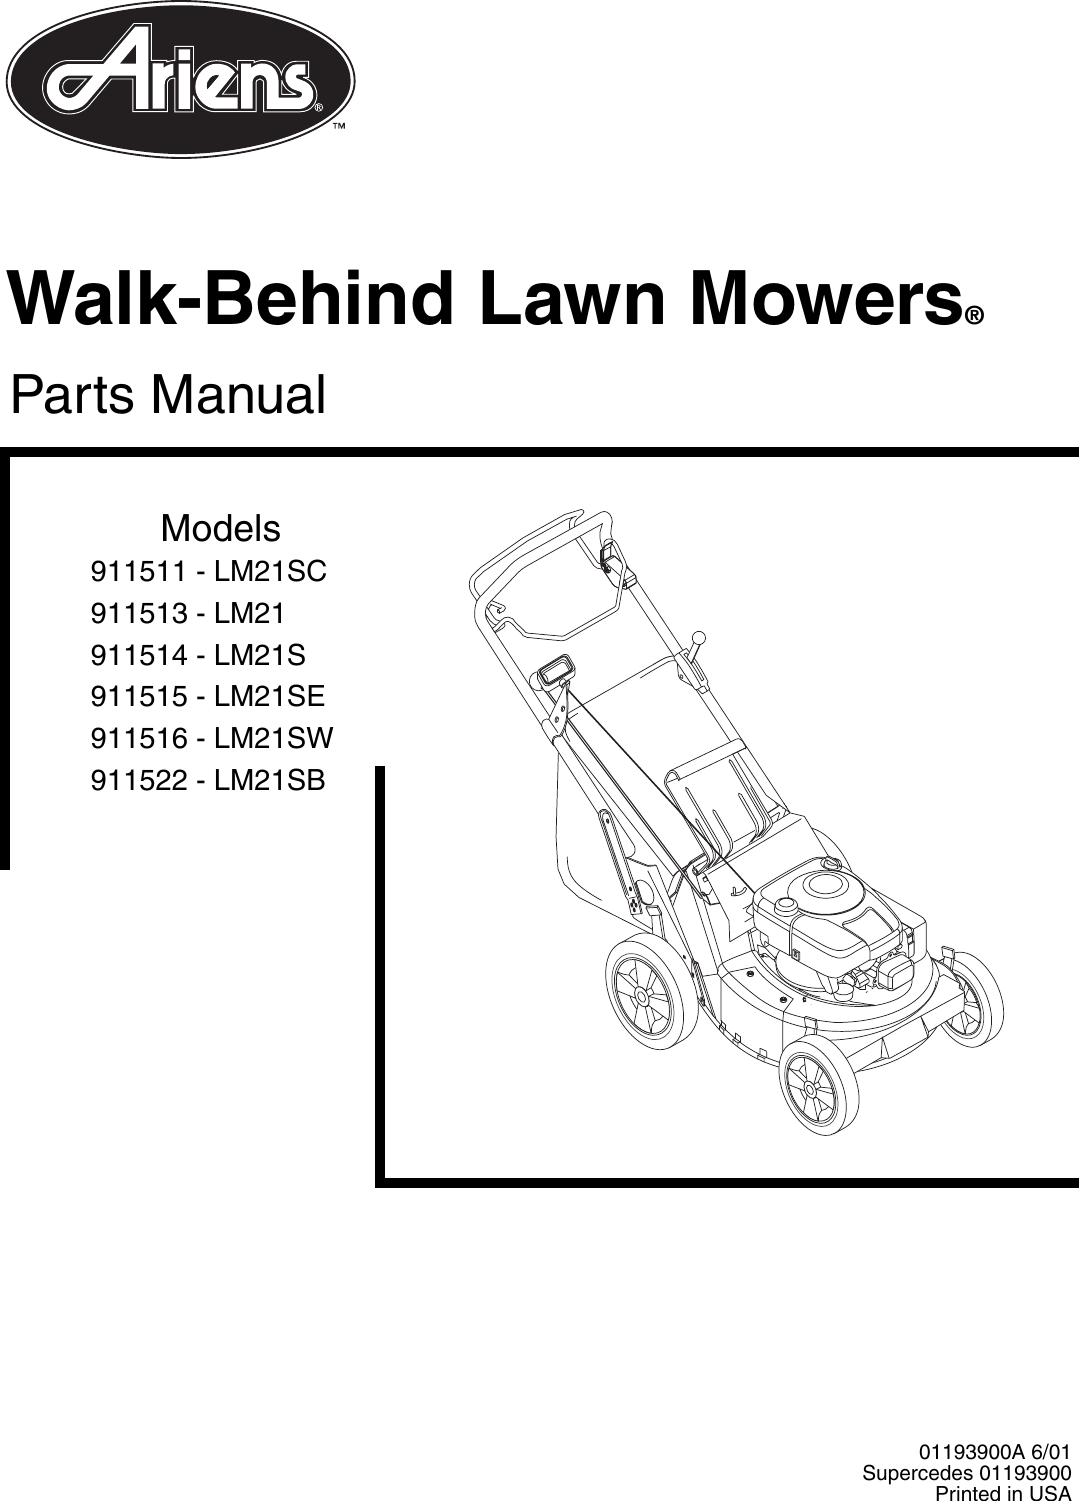 New Ariens Walk Behind Lawnmower Swivel Wheel Front Wheel Tire Set of 2 07149900